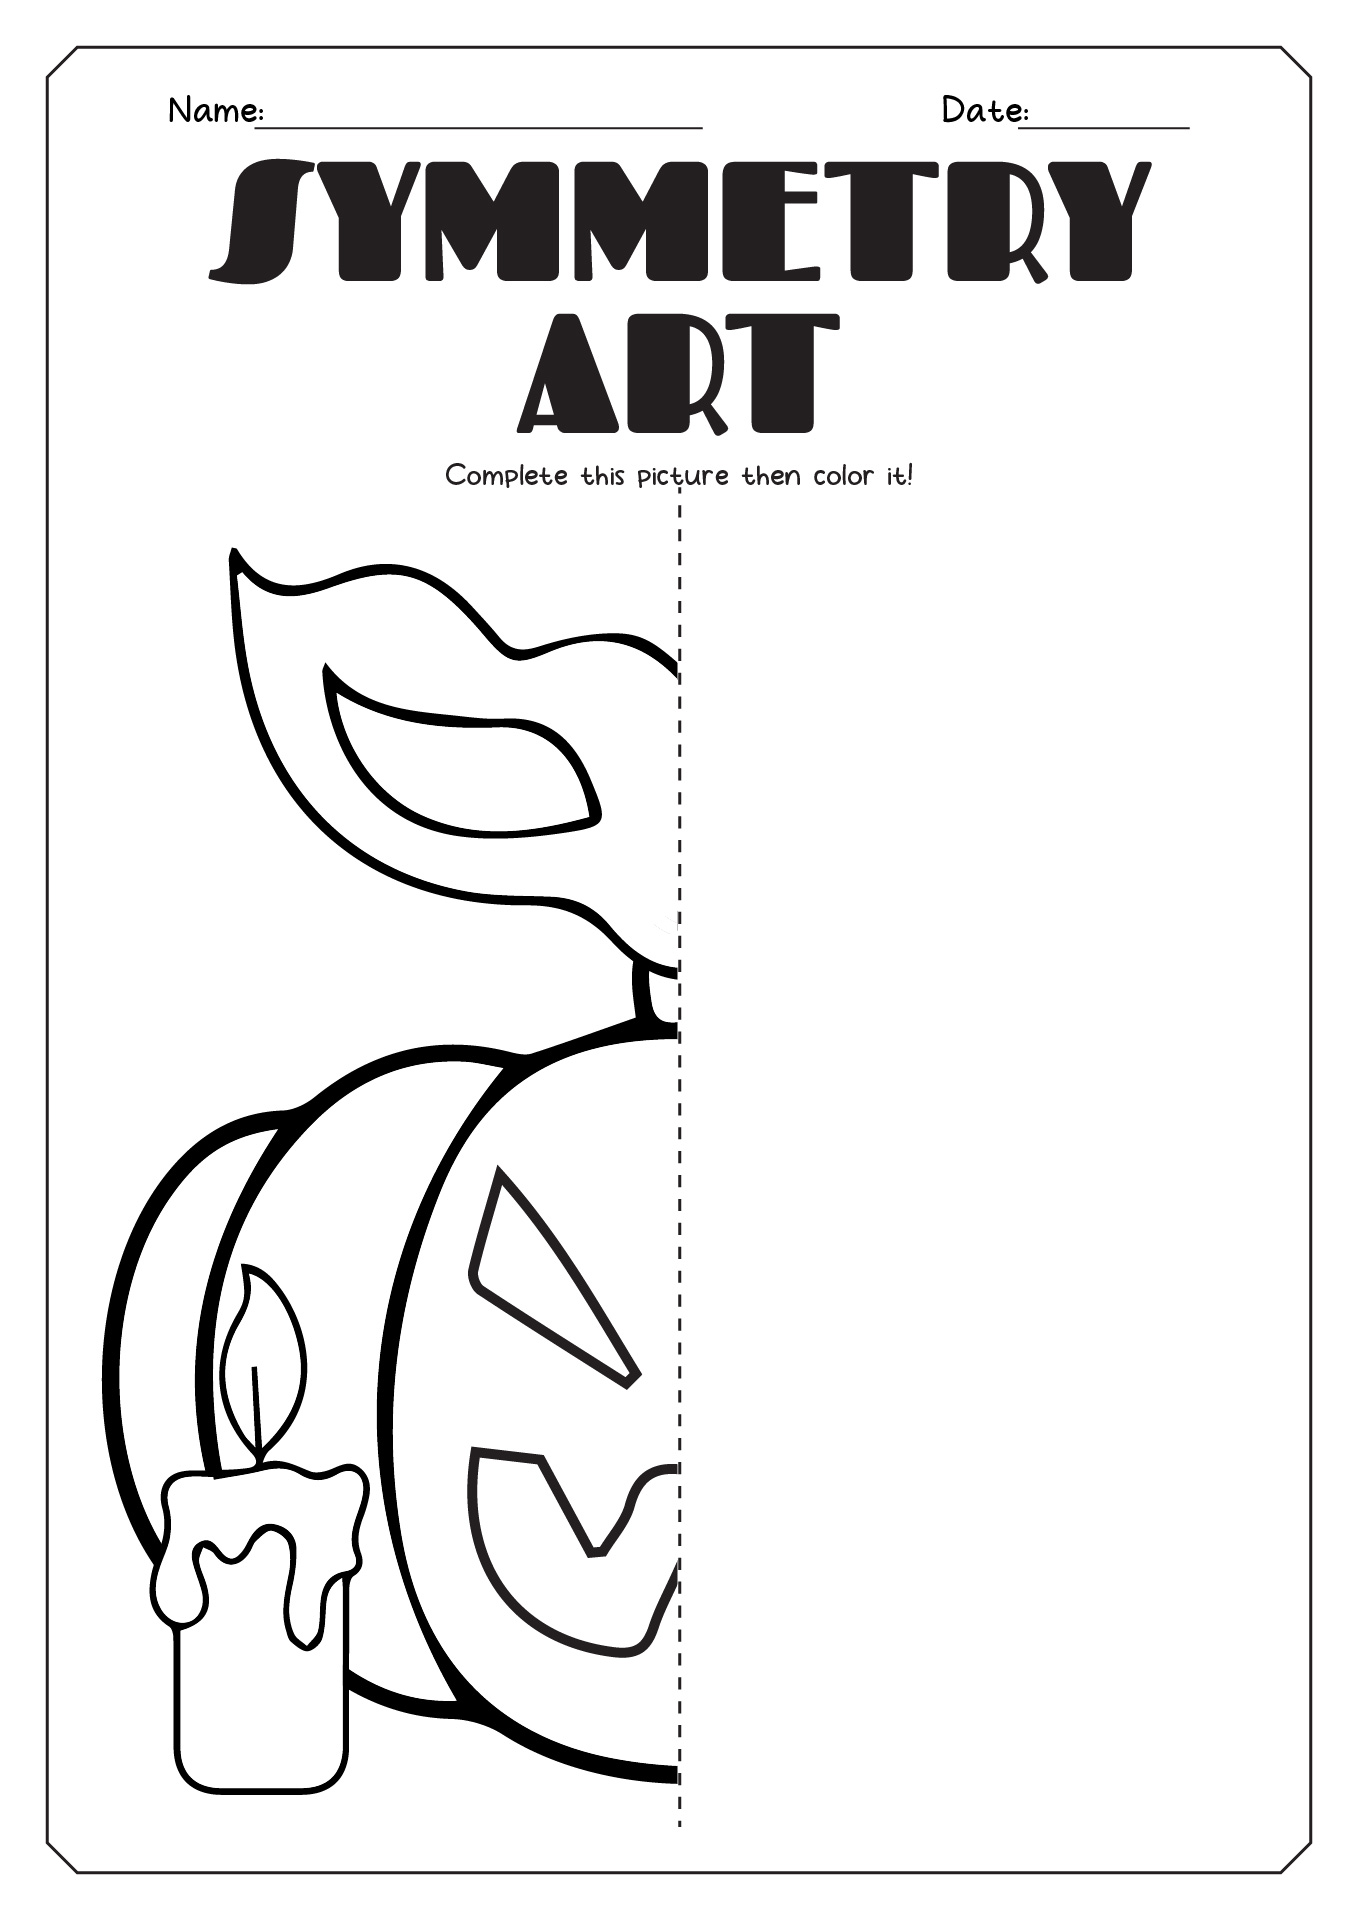 Symmetry Art Worksheets Image